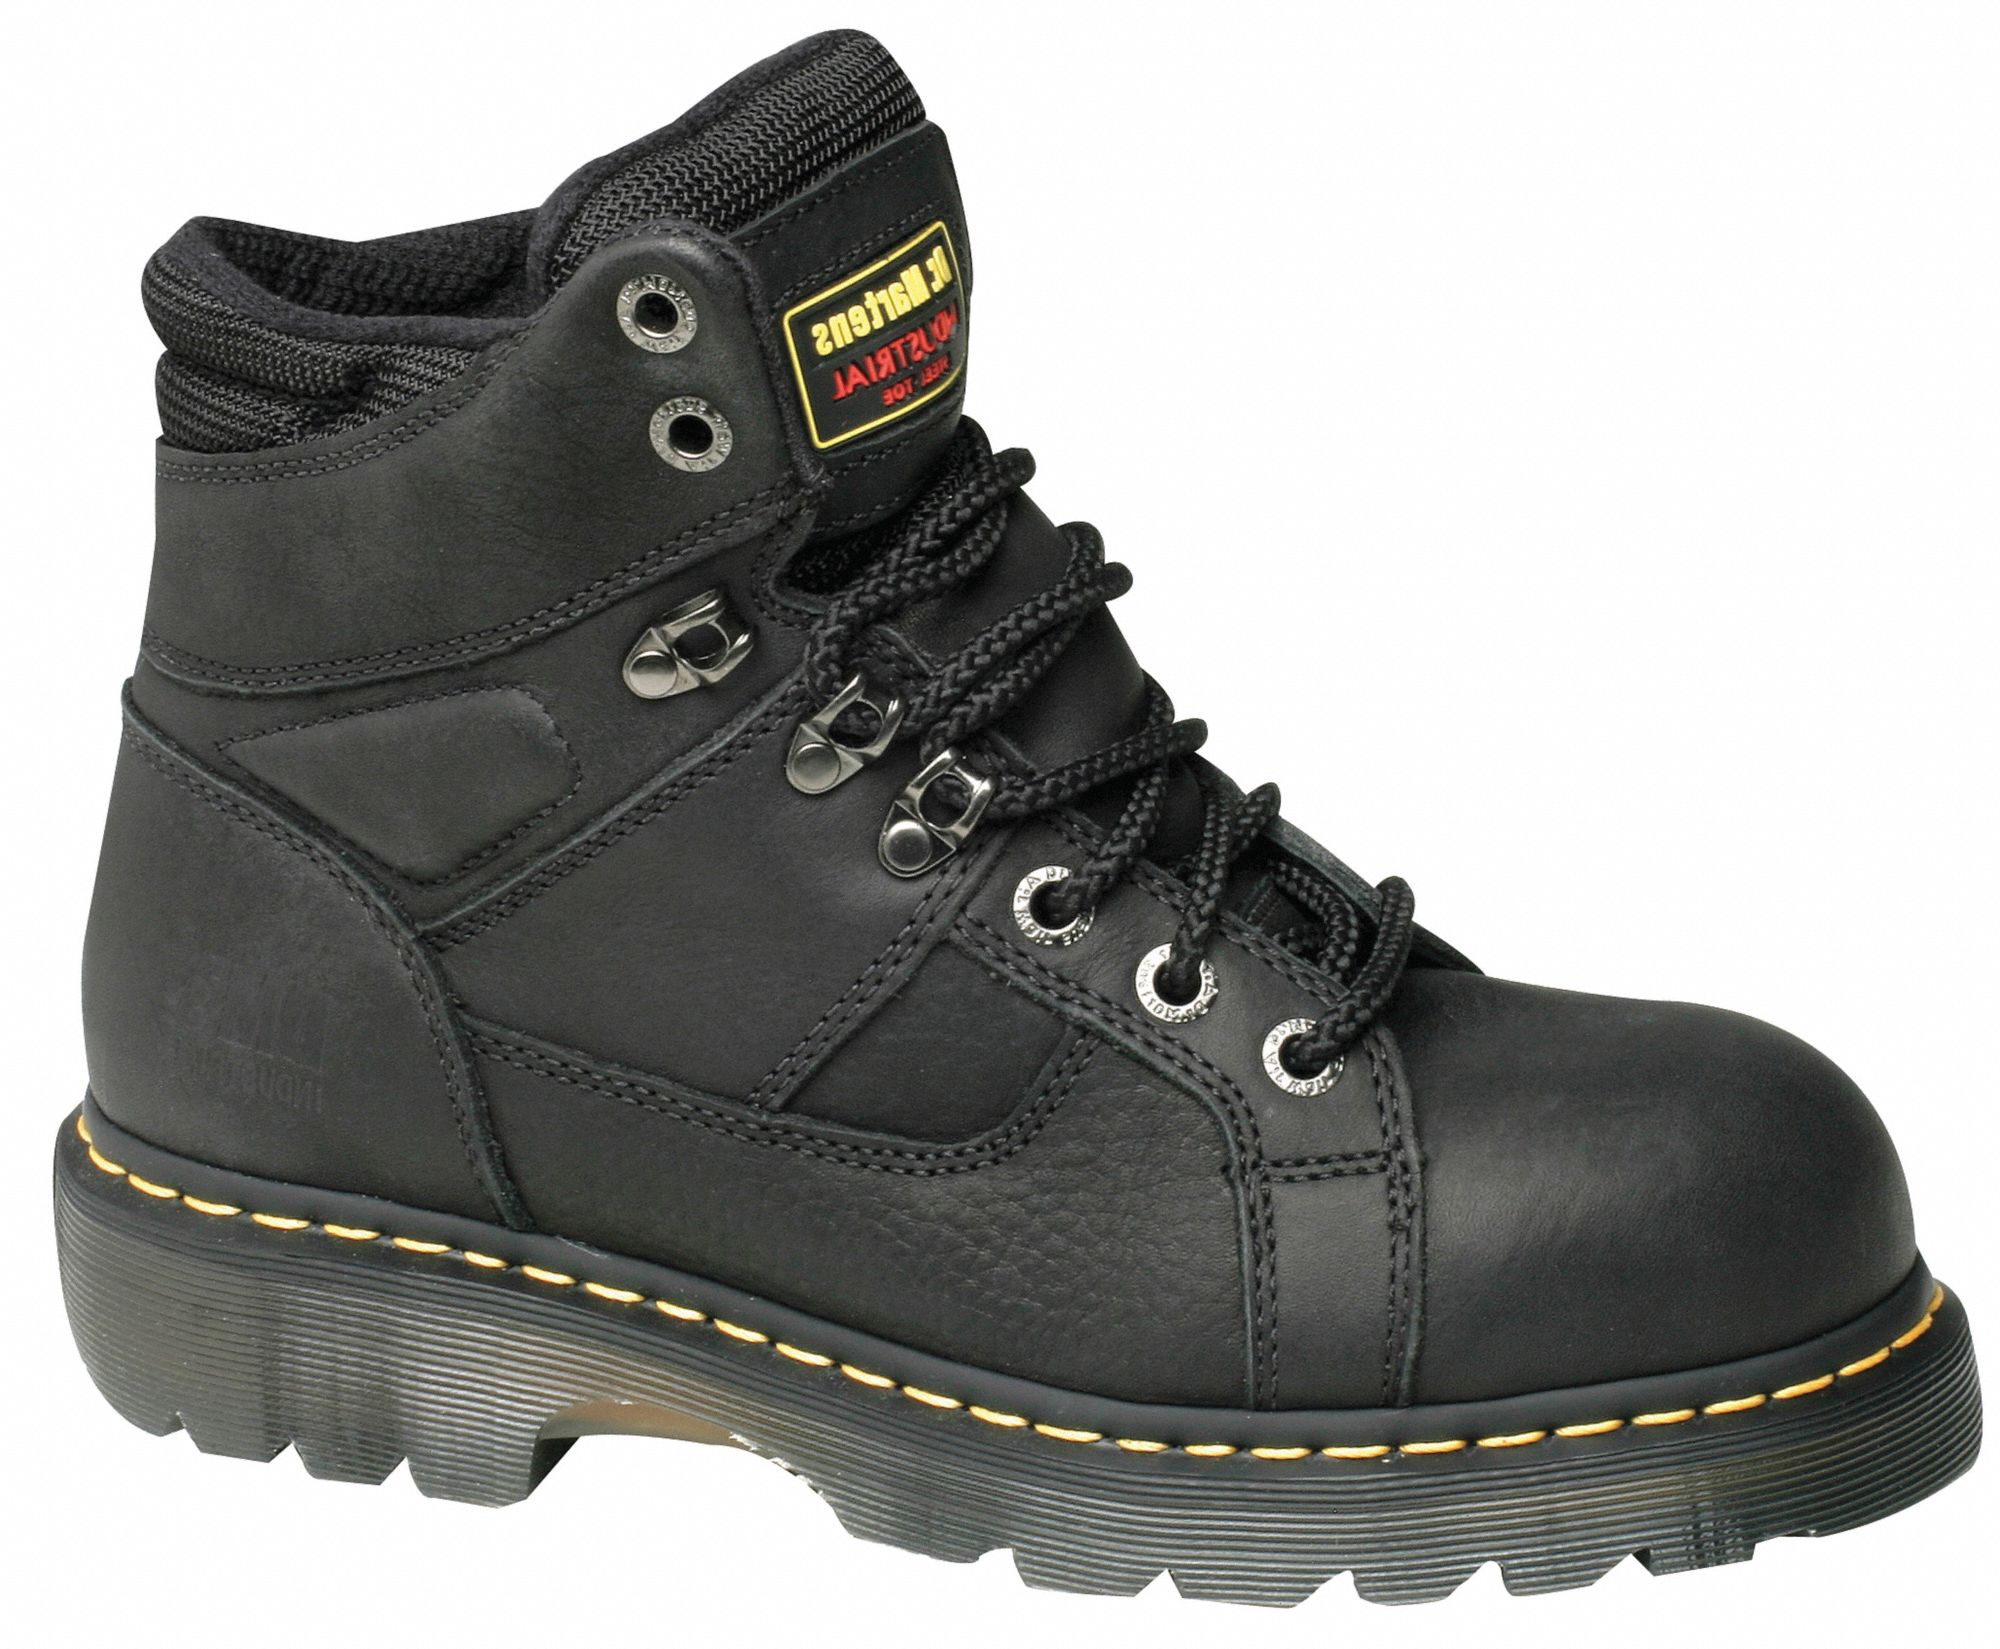 Work Boot: M, 8, 6 in Work Boot Footwear, Men's, Black, Good, 1 PR